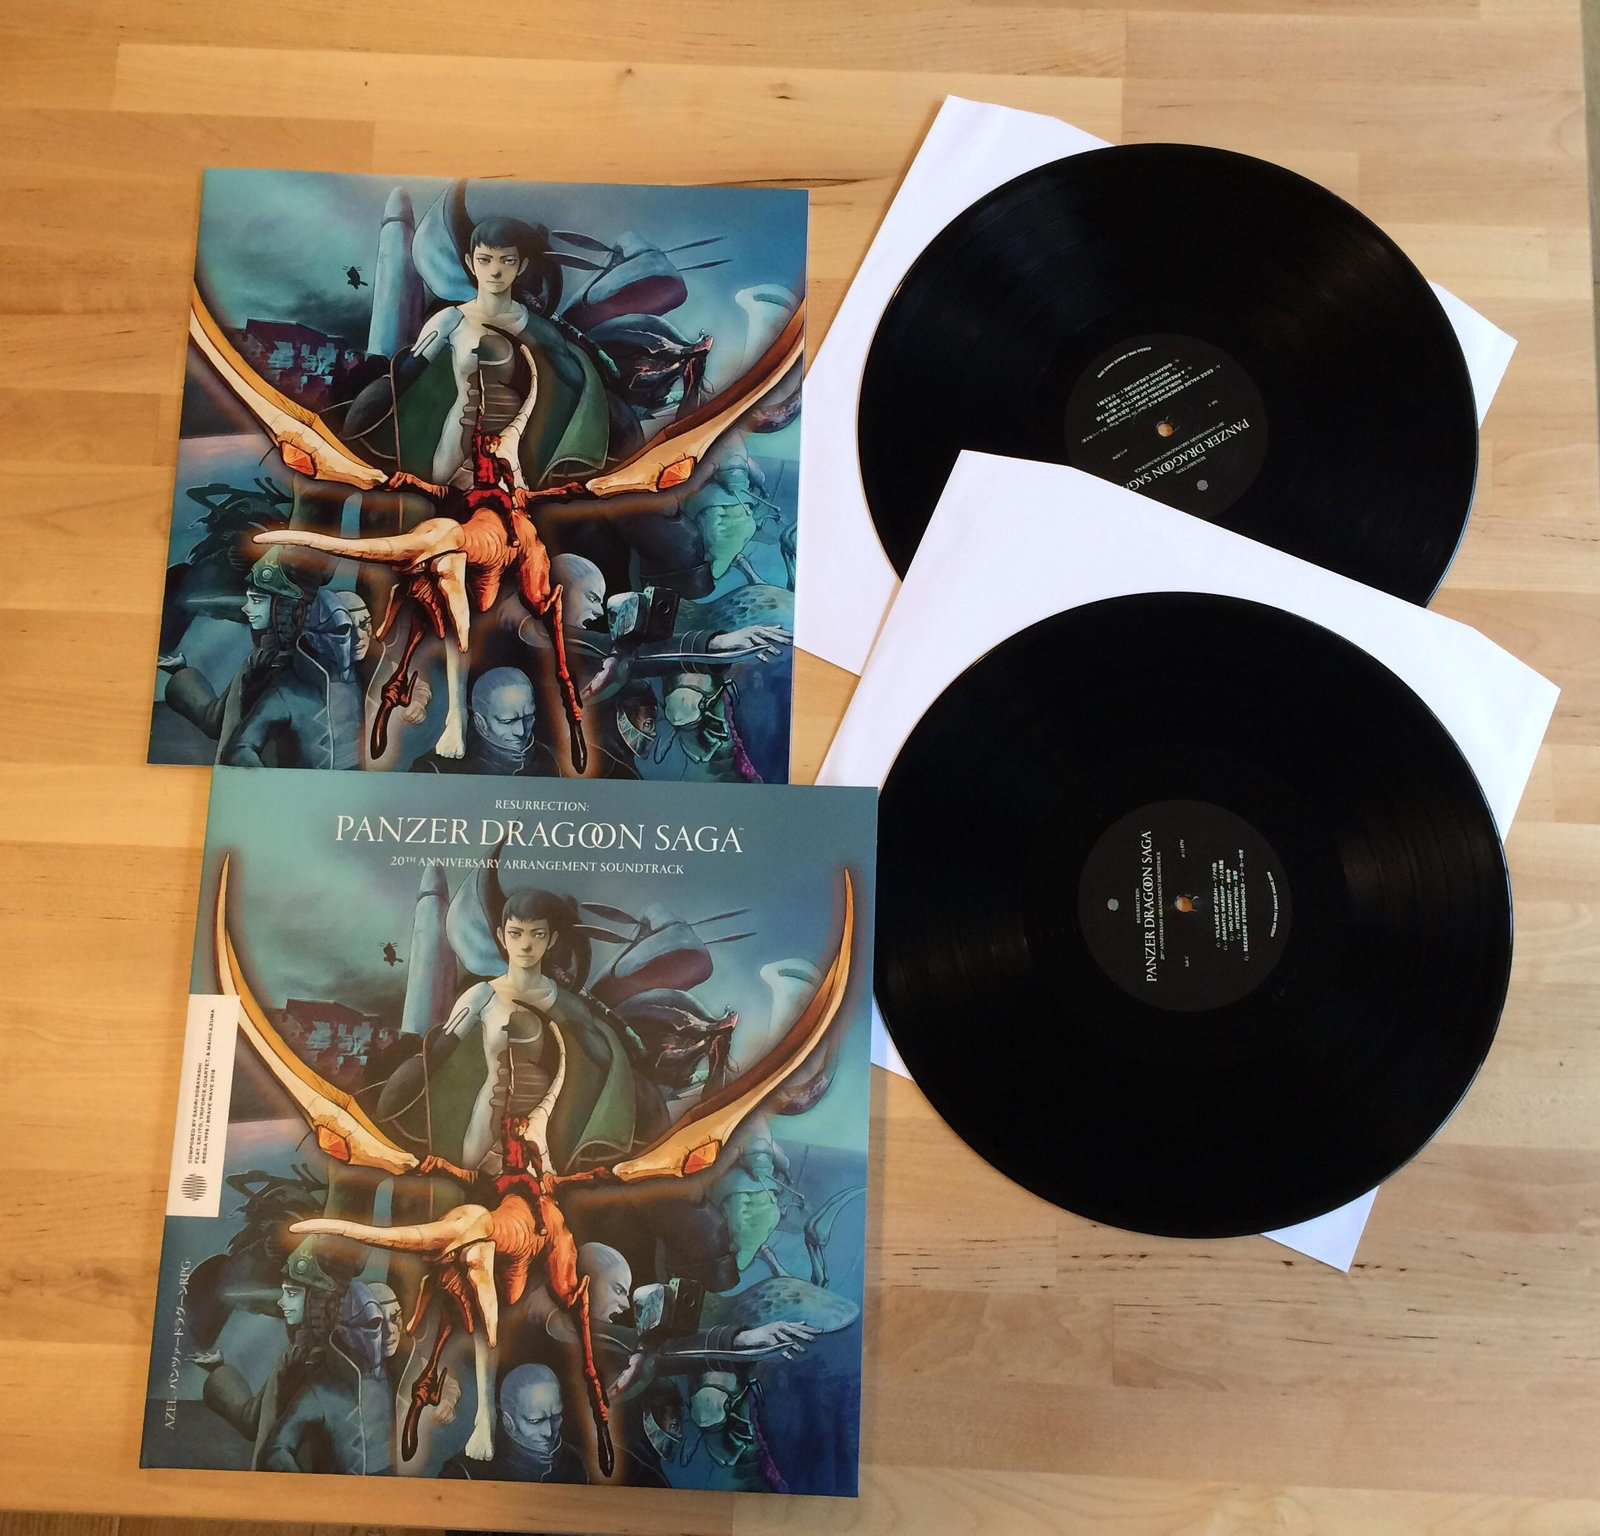 Resurrection: Panzer Dragoon Saga 20th Anniversary Arrangement Vinyl Album is Now Available